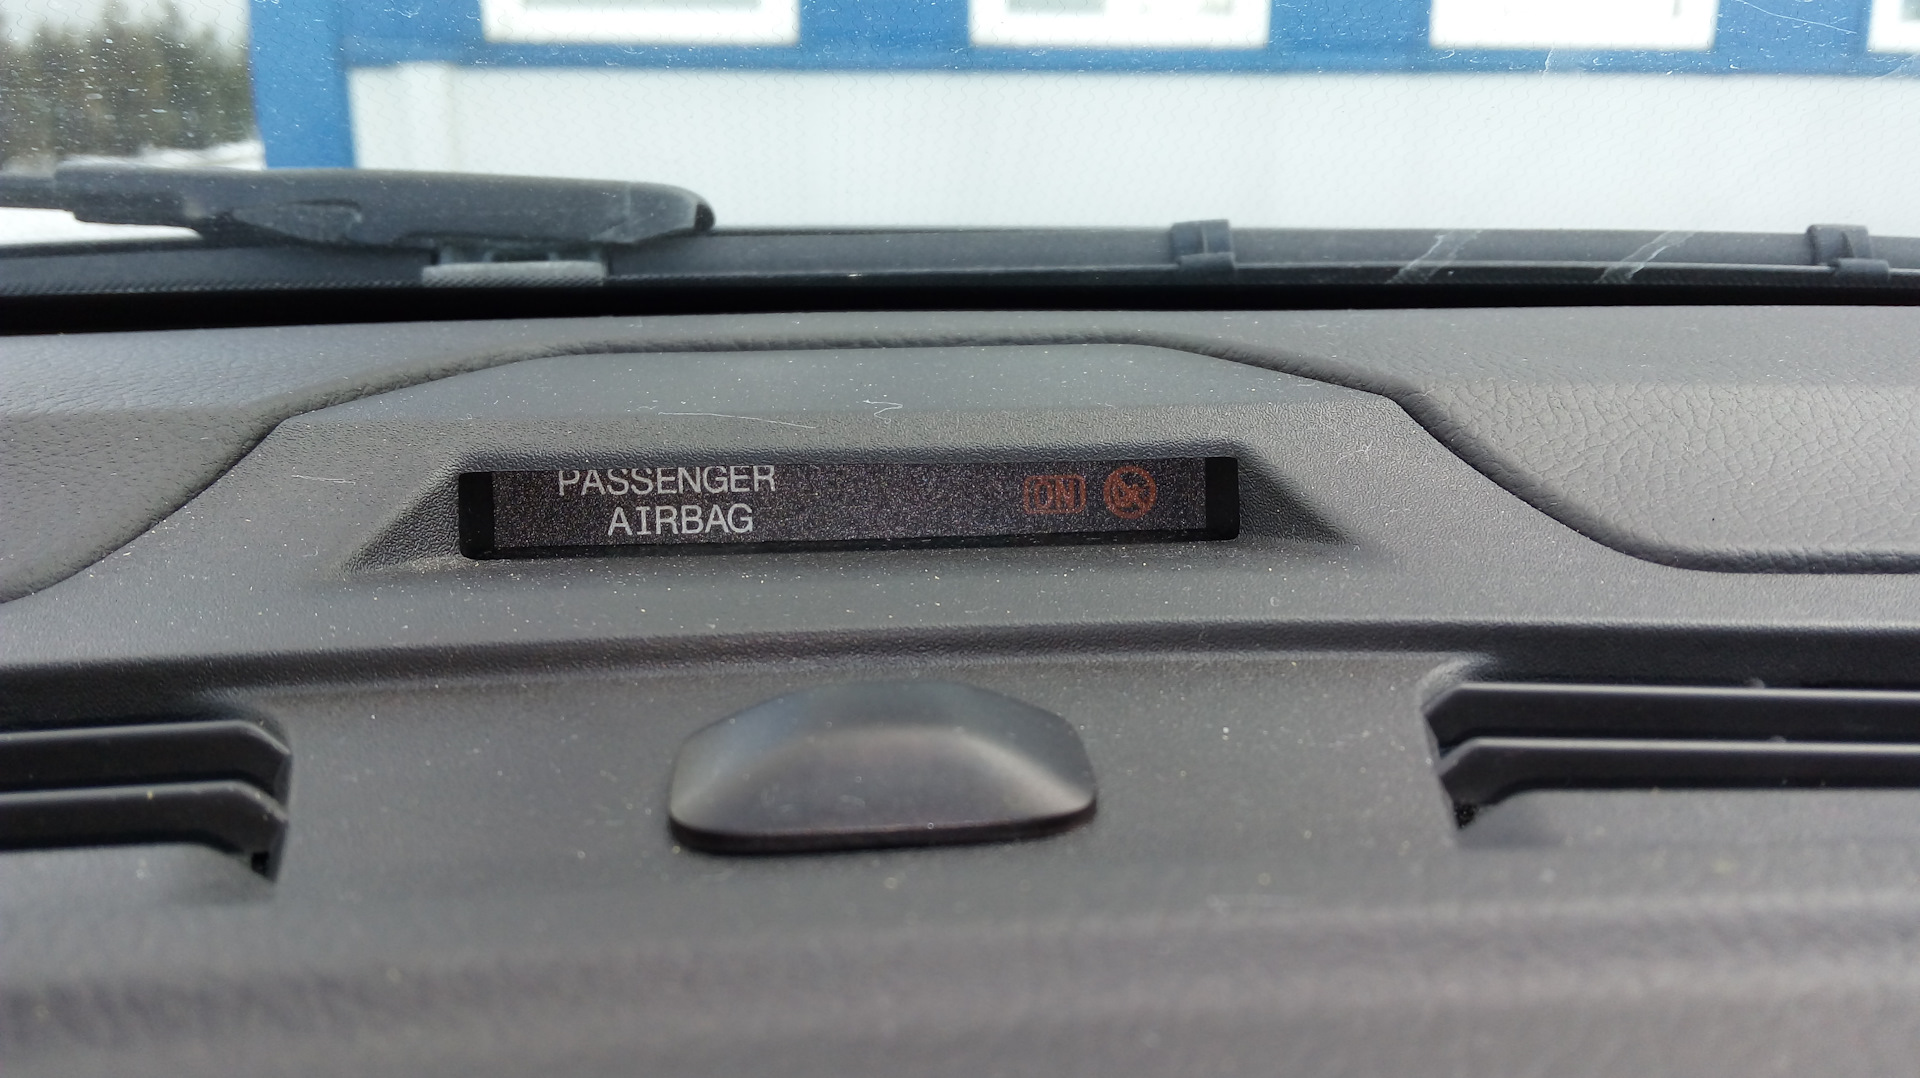 Airbag off. Passenger airbag on горит.